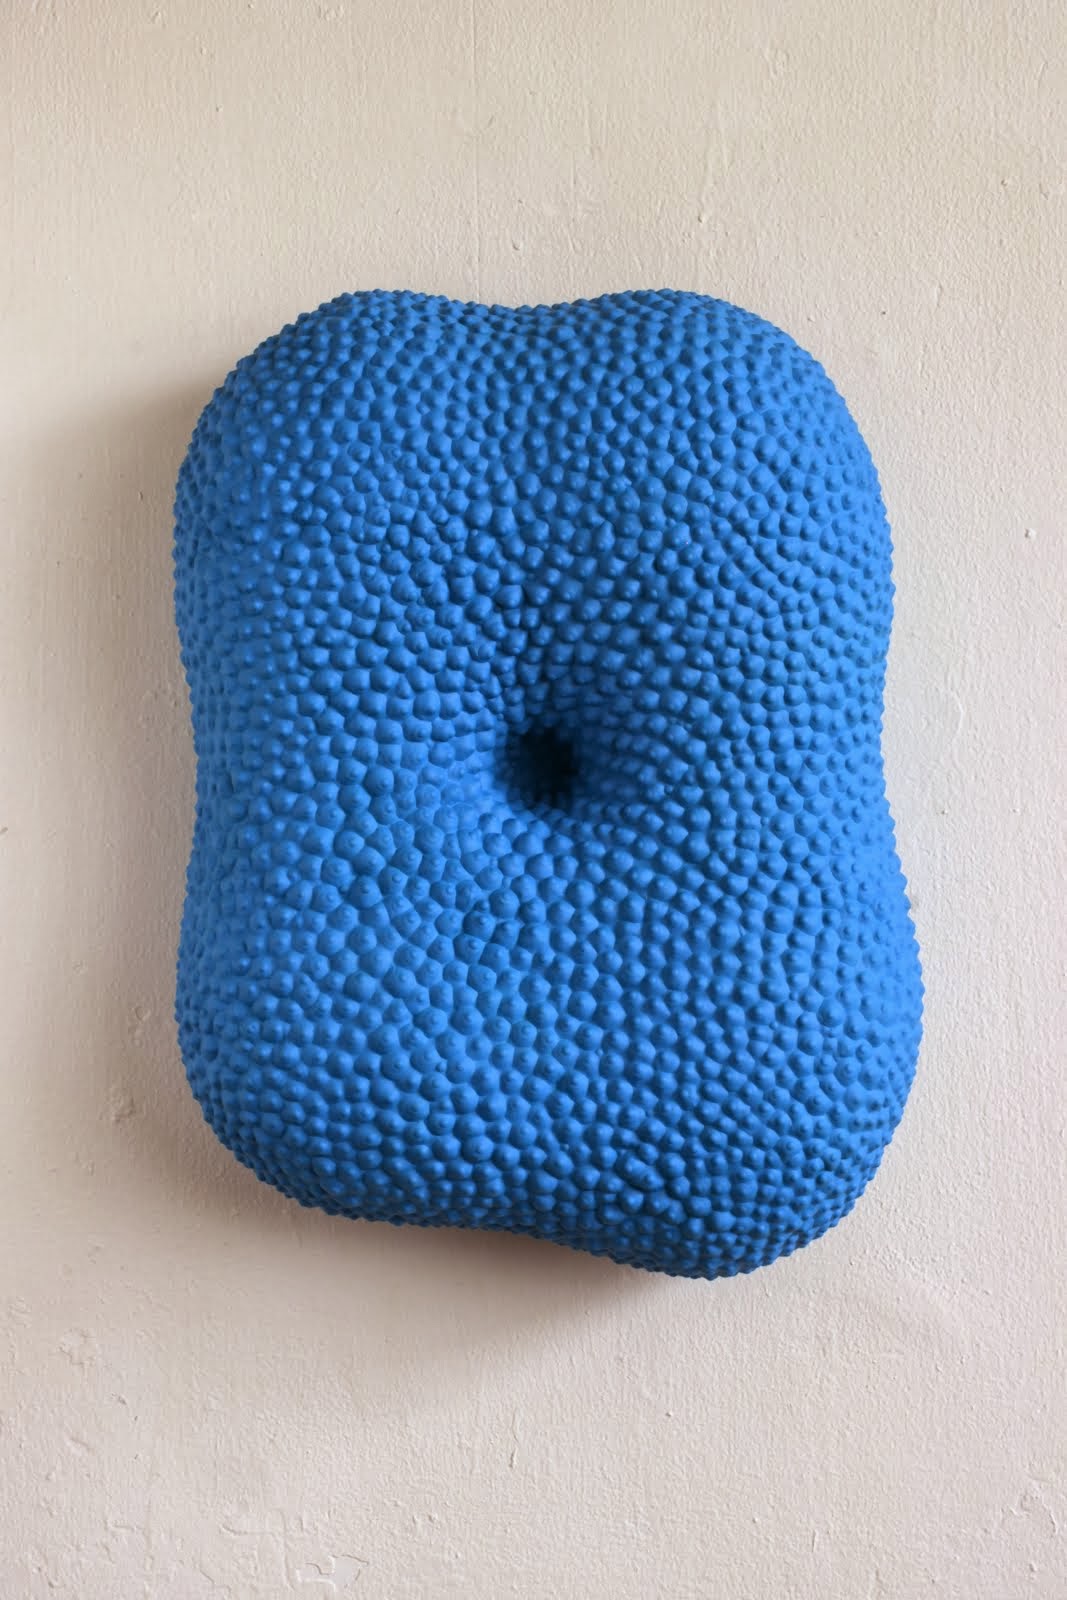 The Blue Pillow, epoxy resin, 56x42x20cm